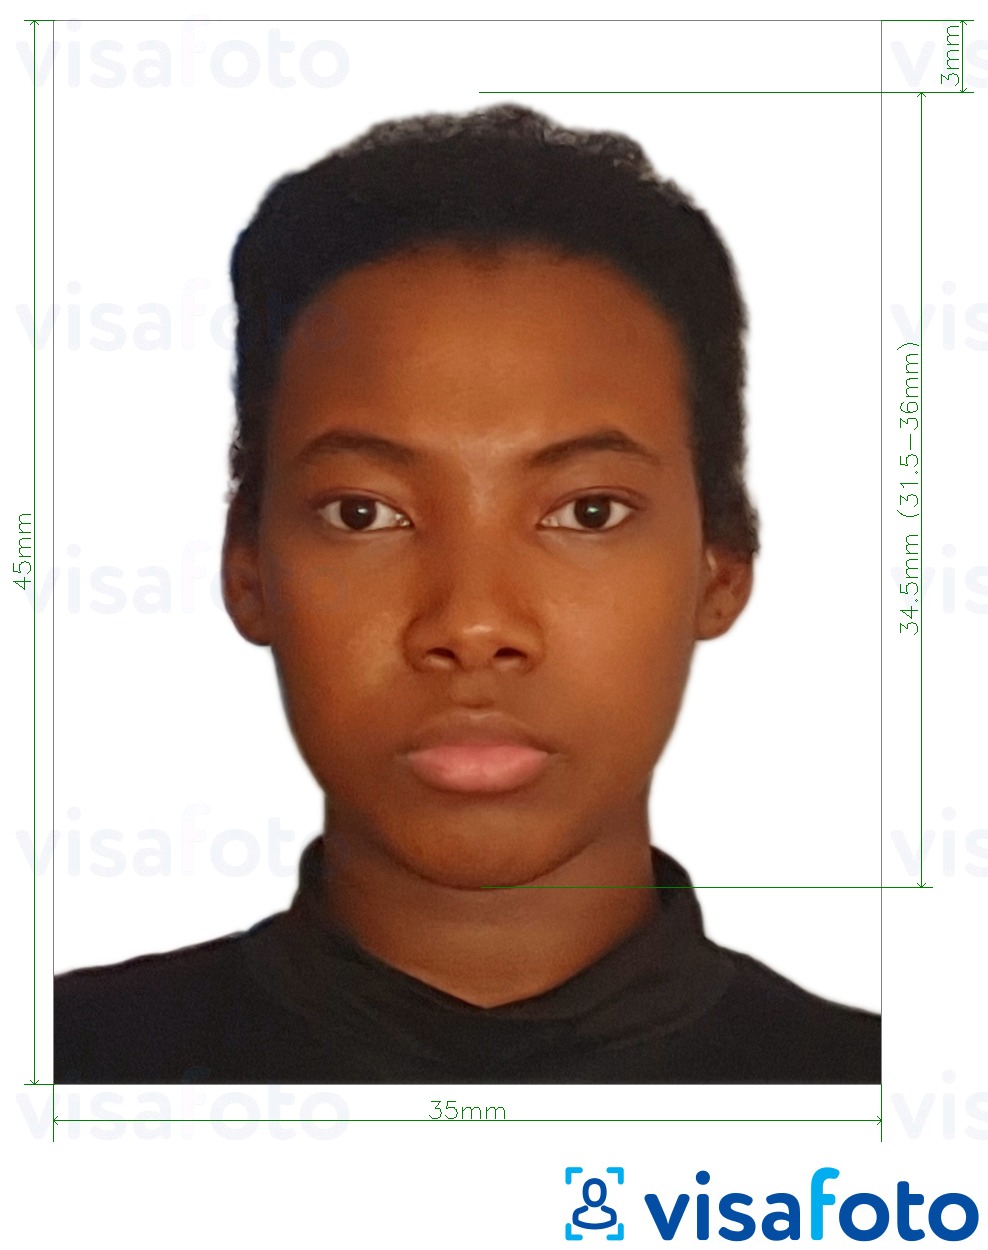 Contoh foto untuk Pasport Malawi 4.5x3.5 cm (45x35 mm) dengan spesifikasi saiz yang tepat.